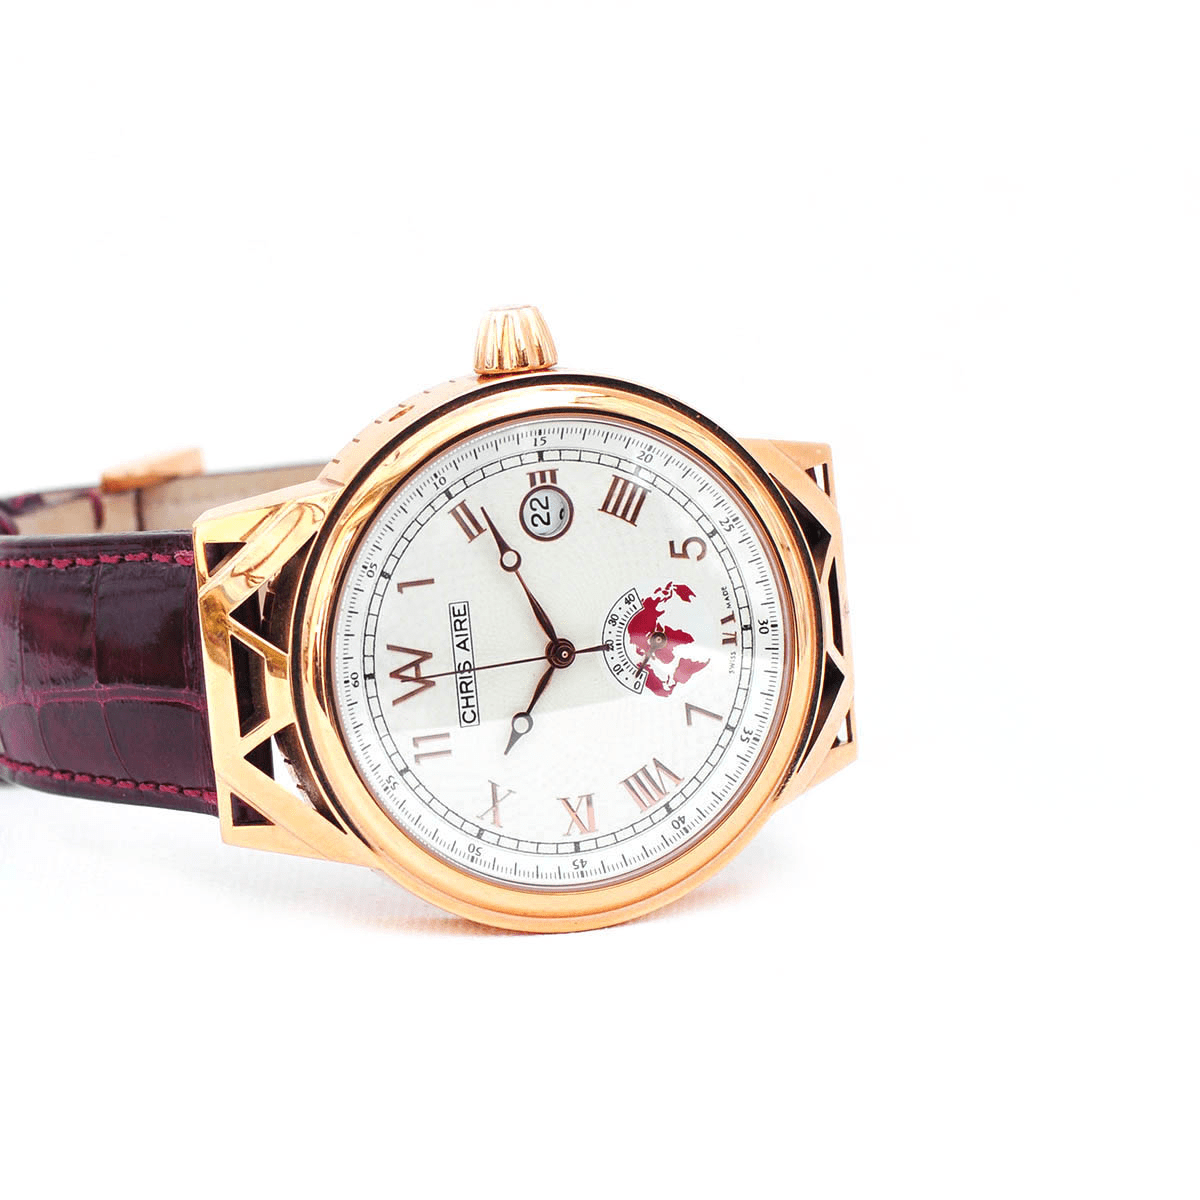 Men’s Gold Watch - Aire Capitol Hill Watch Swiss Made 18 Karat Solid Gold Power Reserve Luxury Rare Watch